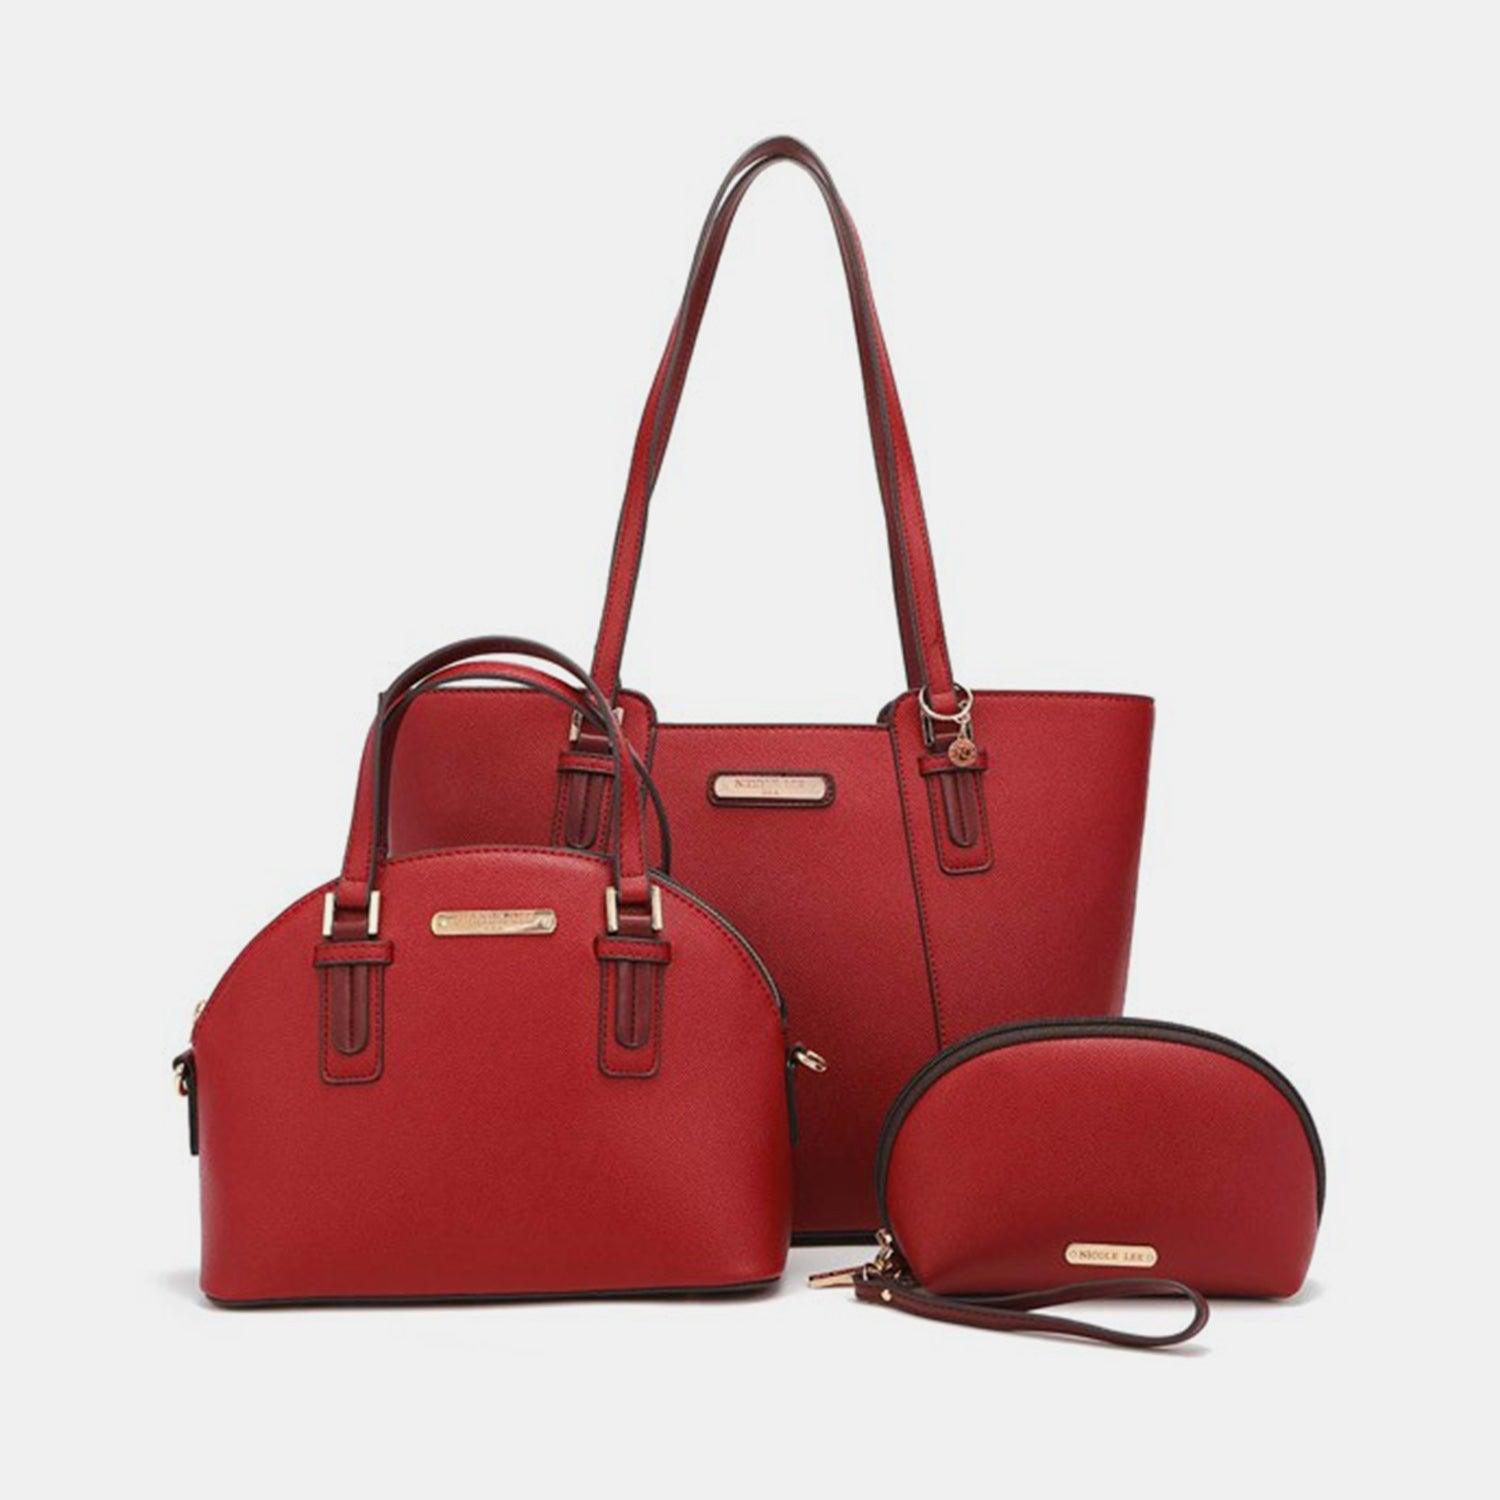 three pieces of red handbag with matching purse